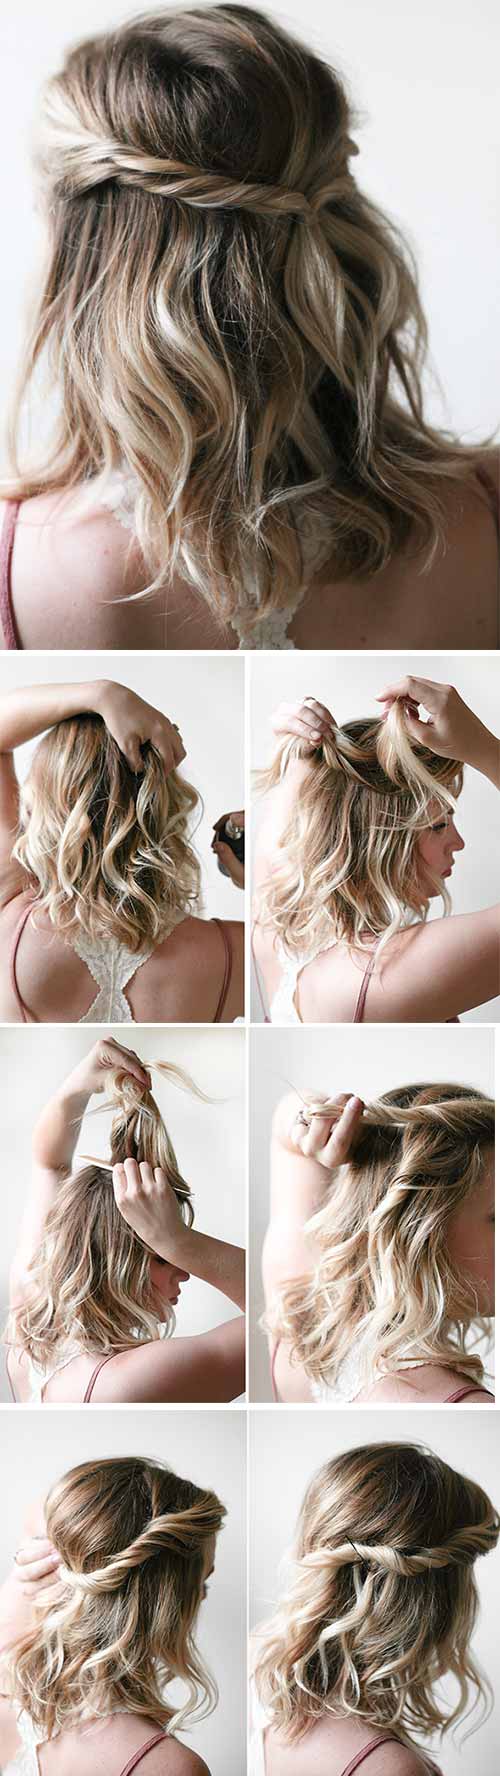 35+ Cute & Easy Ways to Style Short Hair : Waterfall Braid Long Bob